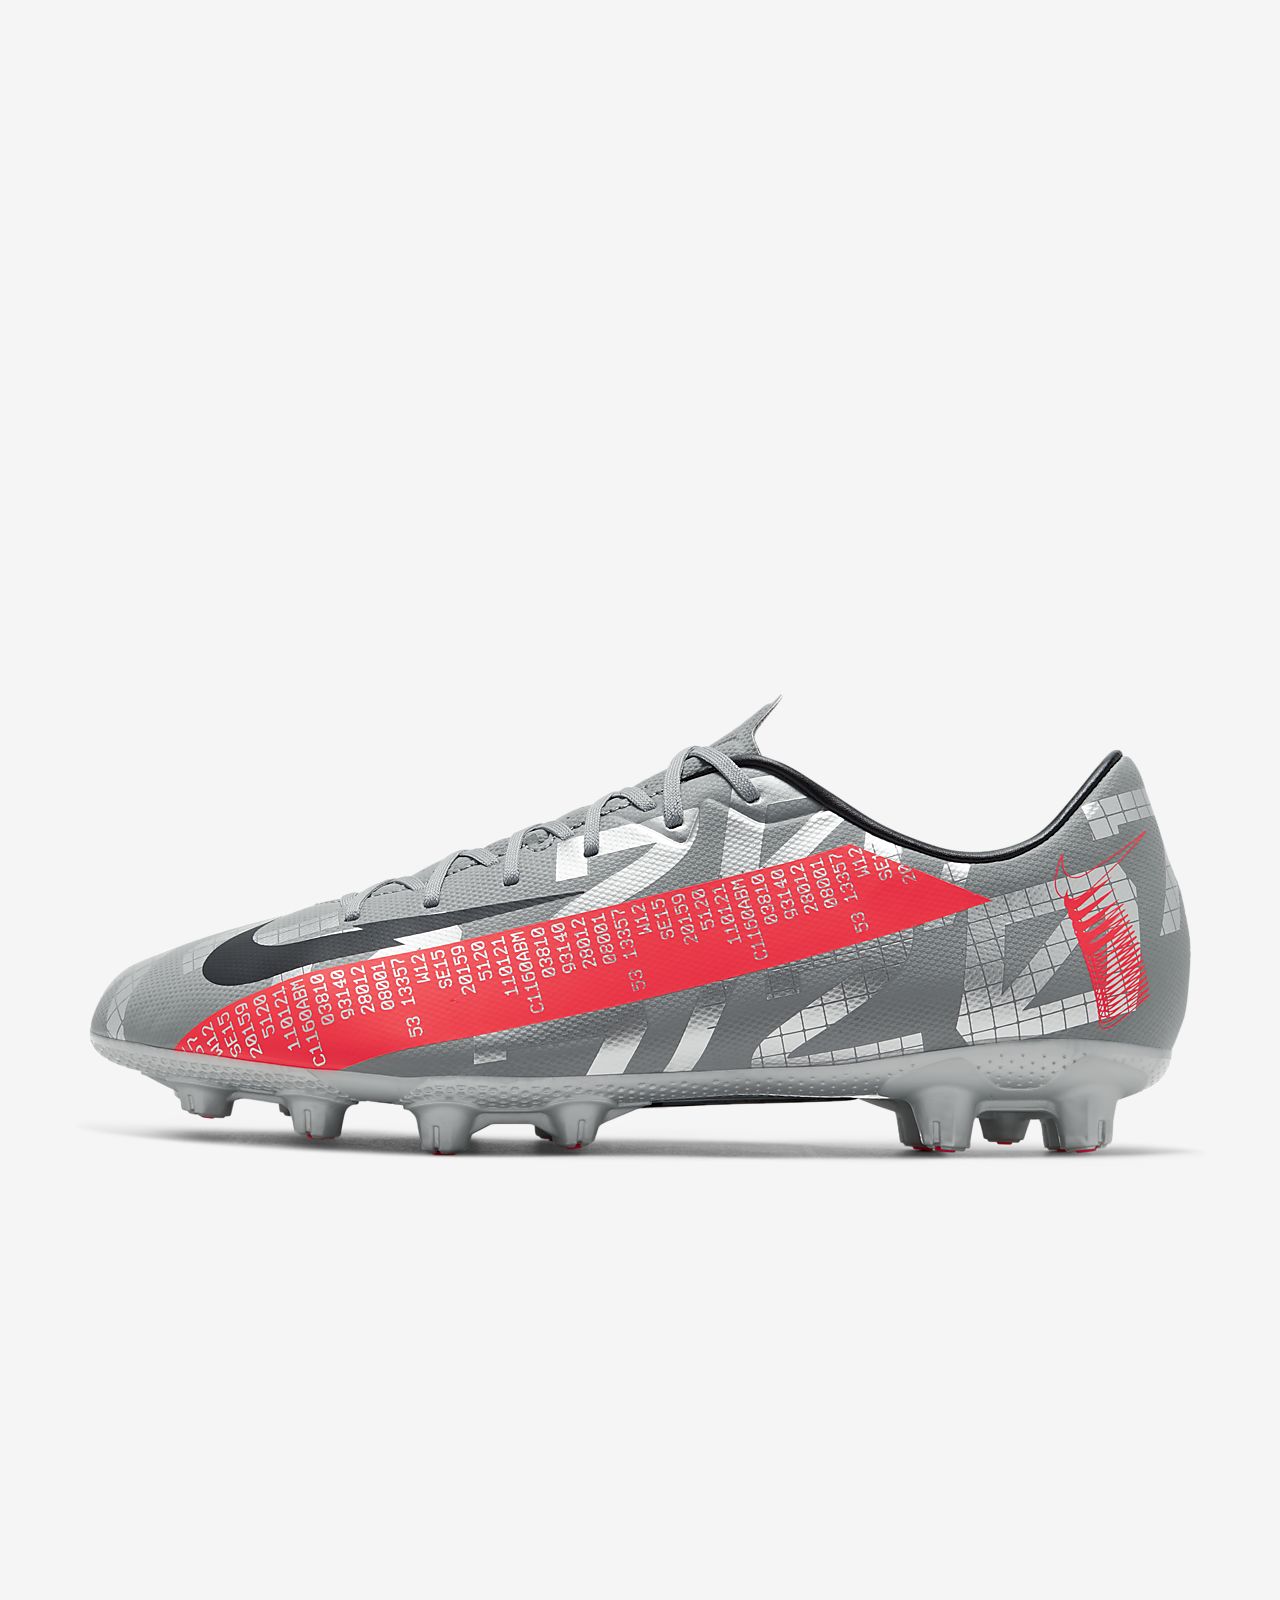 soccer shoes online